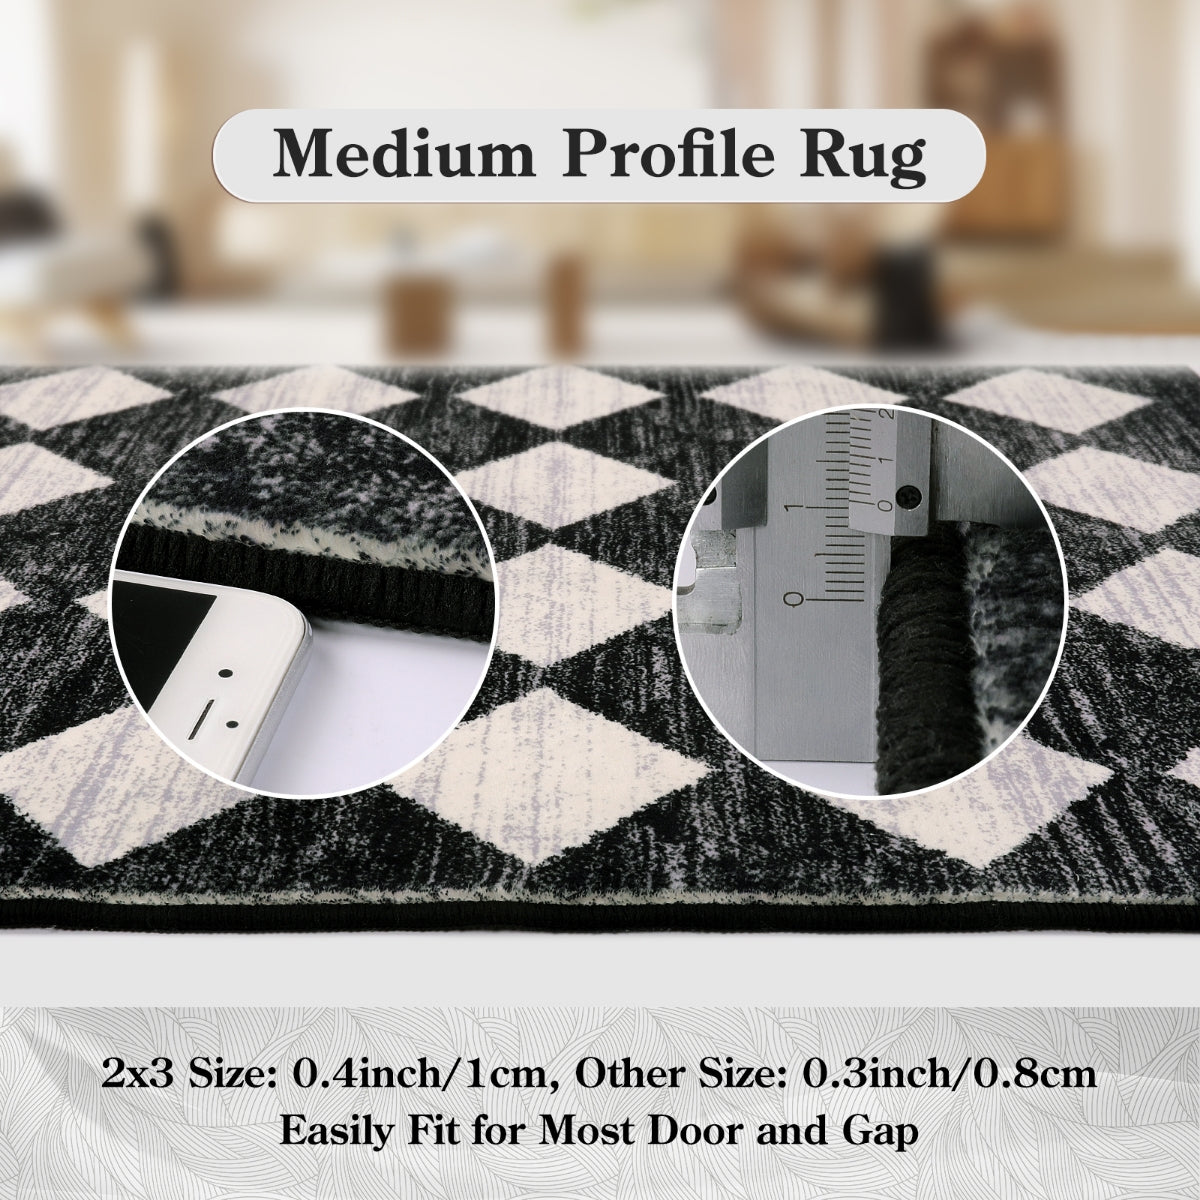 Soft Contemporary Geometric Diamond Checkered Tile Area Rug